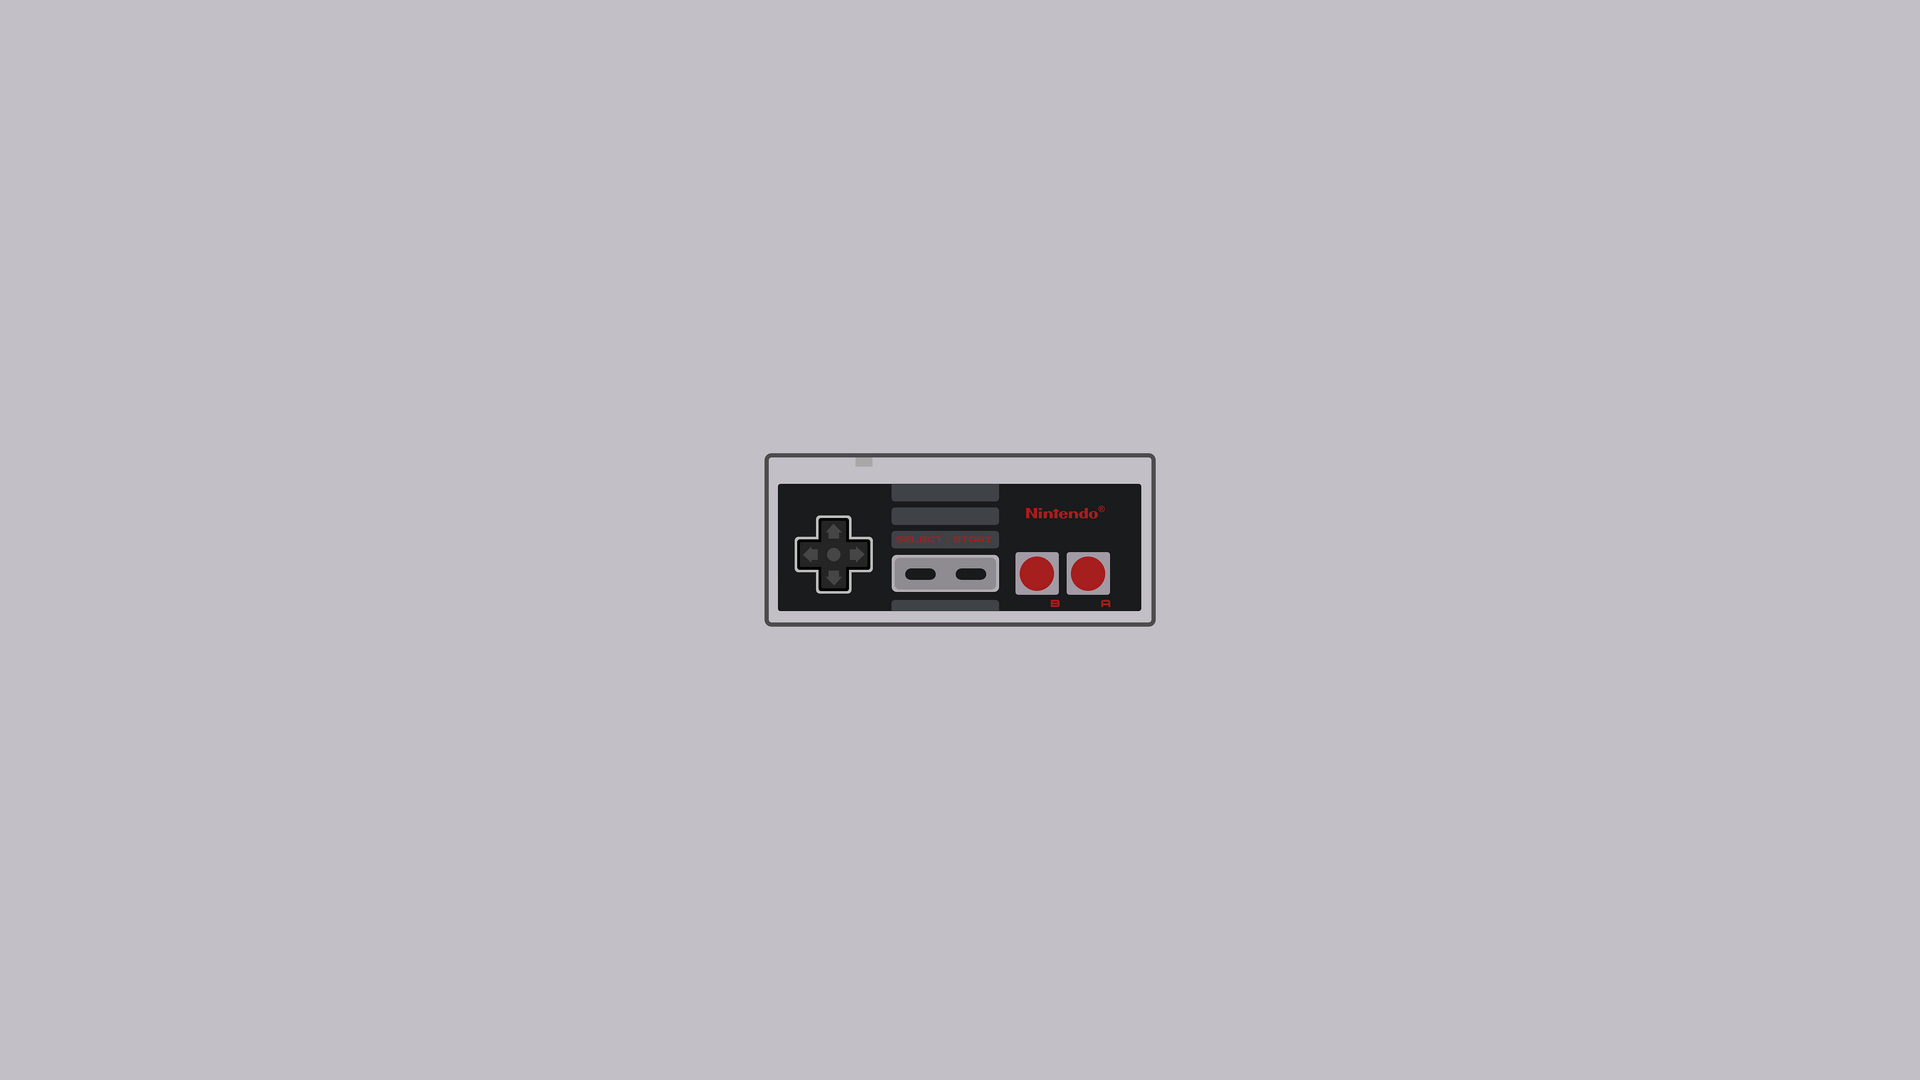 Nintendo Retro Games Retro Console Gray Minimalism Vintage Video Game Art Controllers Simple Backgro 1920x1080